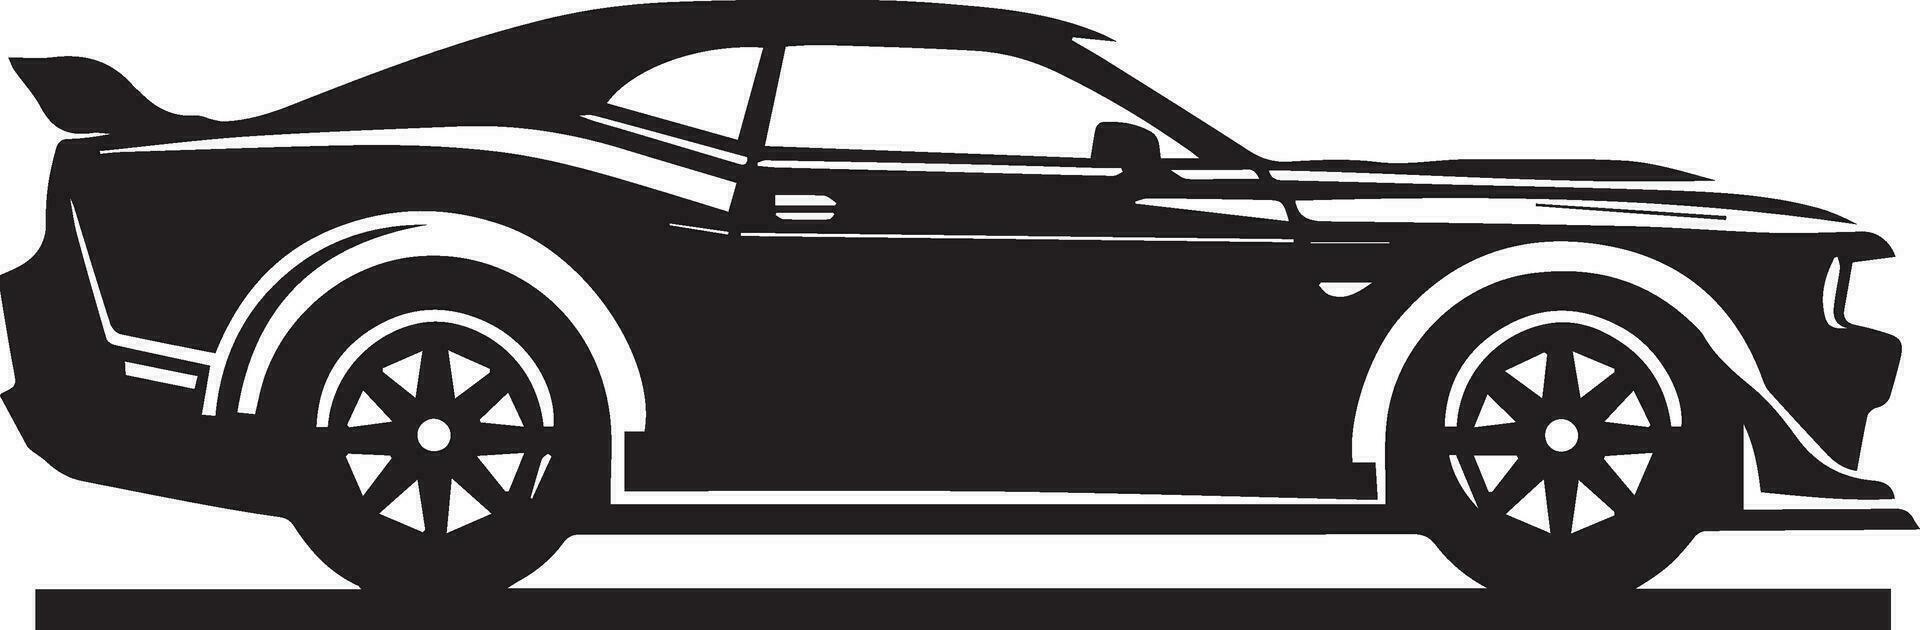 Car vector silhouette illustration black color 12